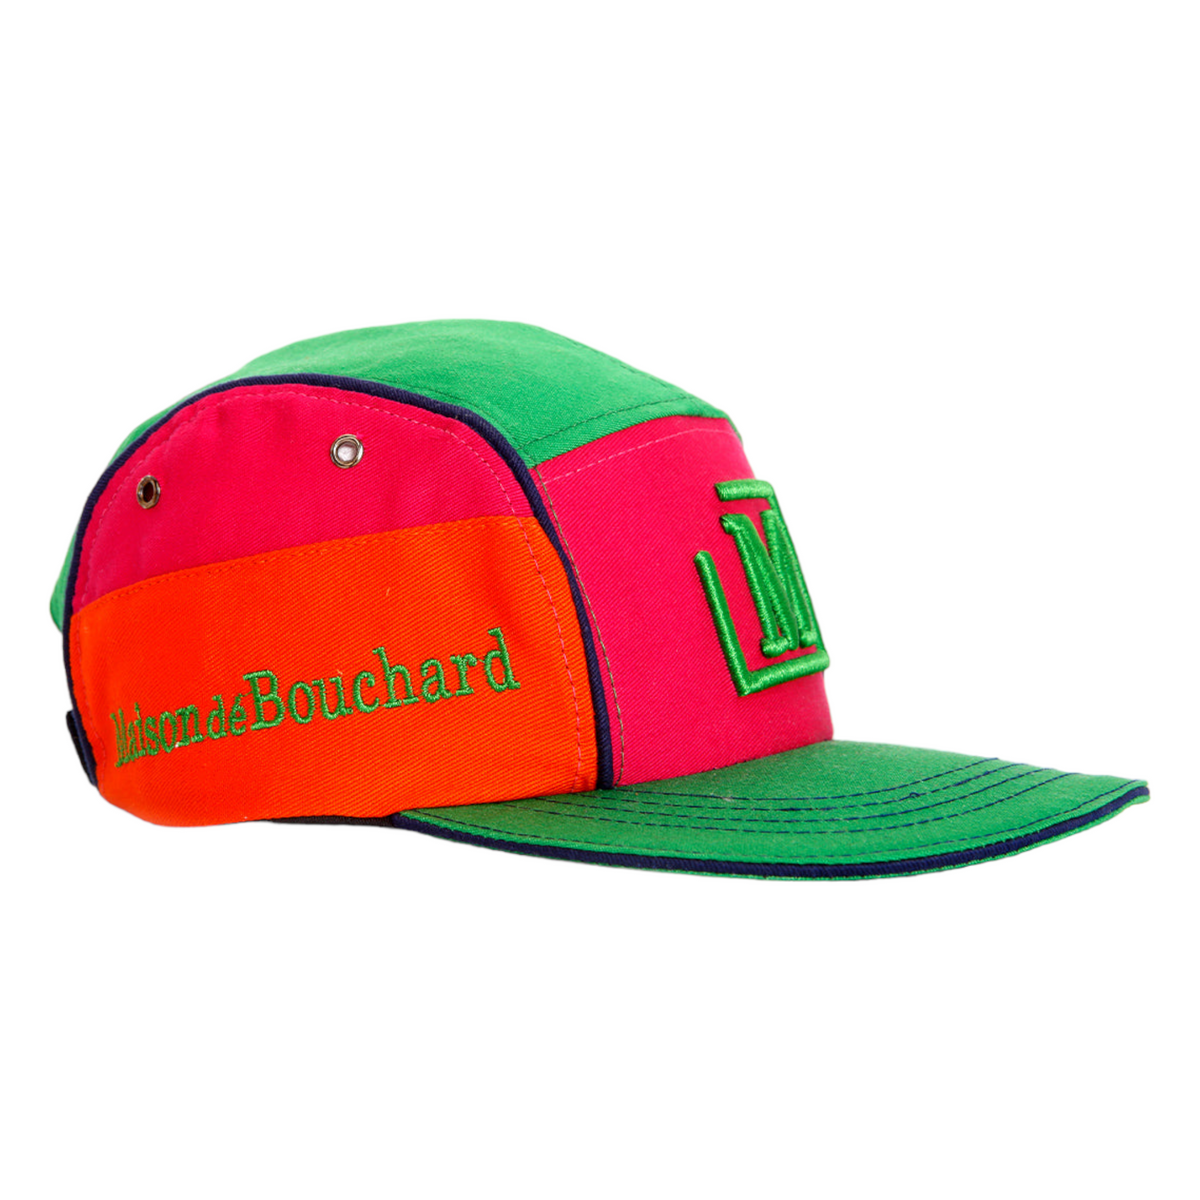 MDB Brand Six Panel Hat - Playful Color